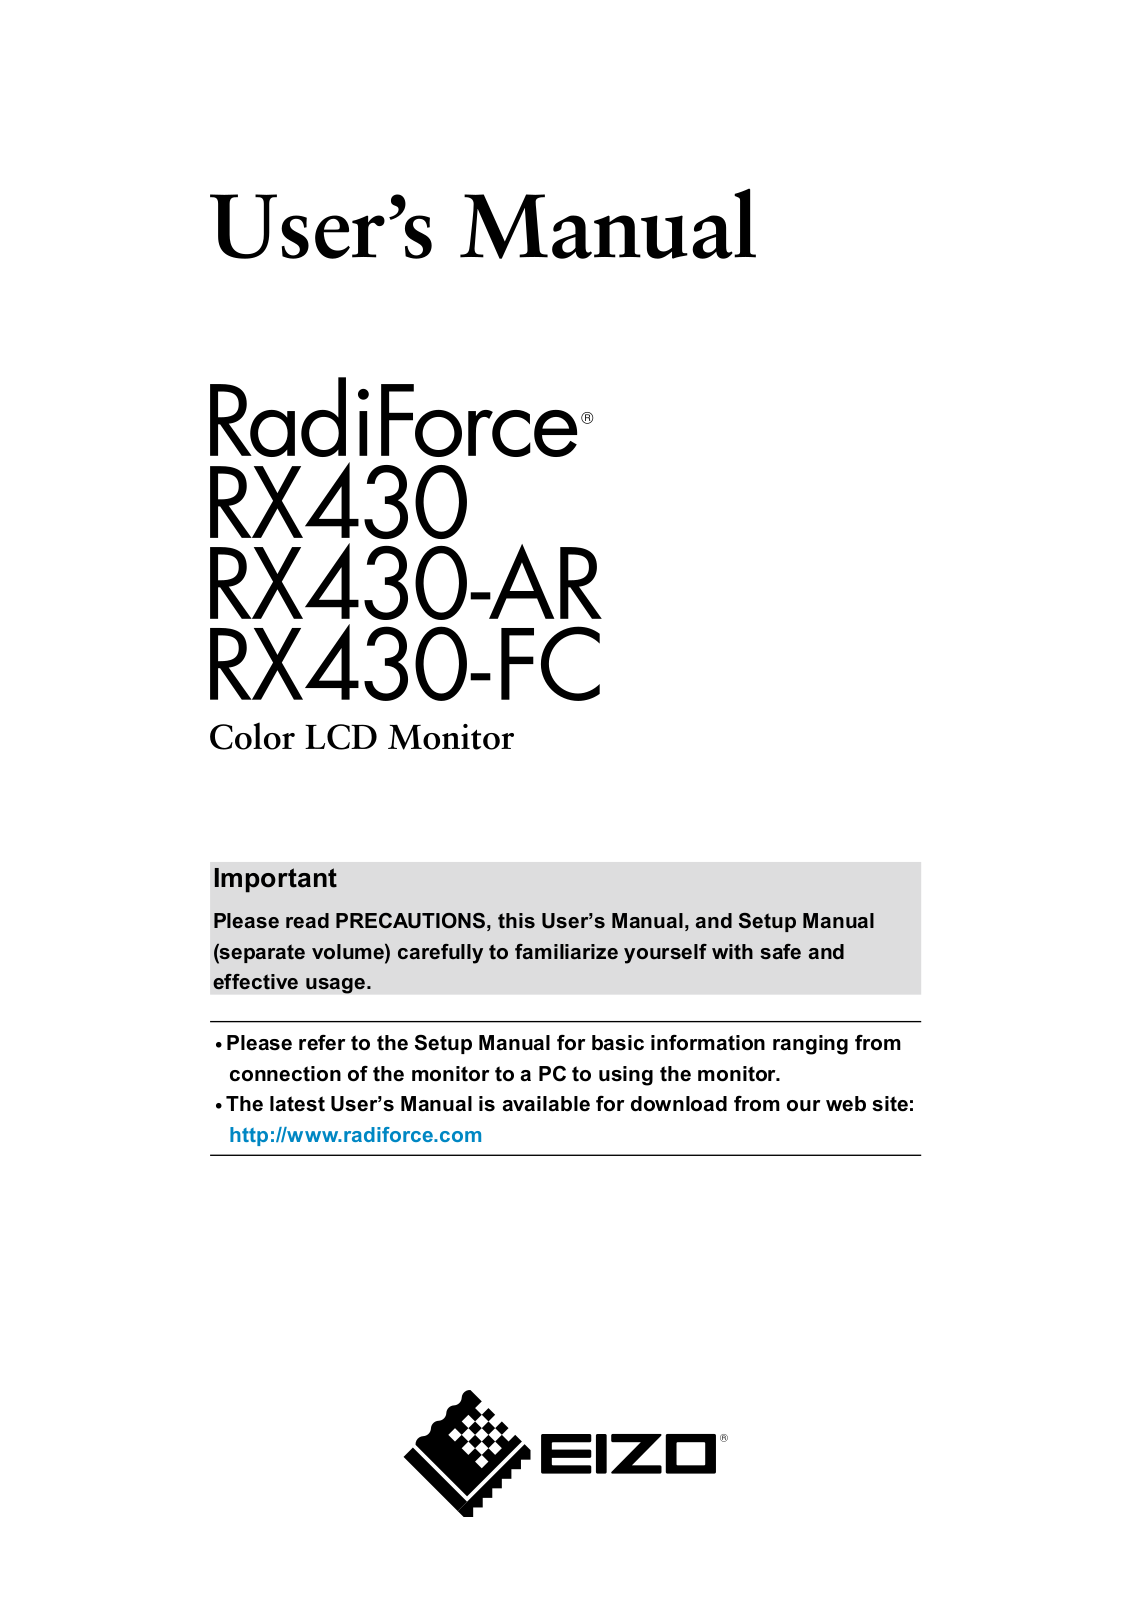 Eizo RX430-FC, RX430-AR, RX430 User Manual